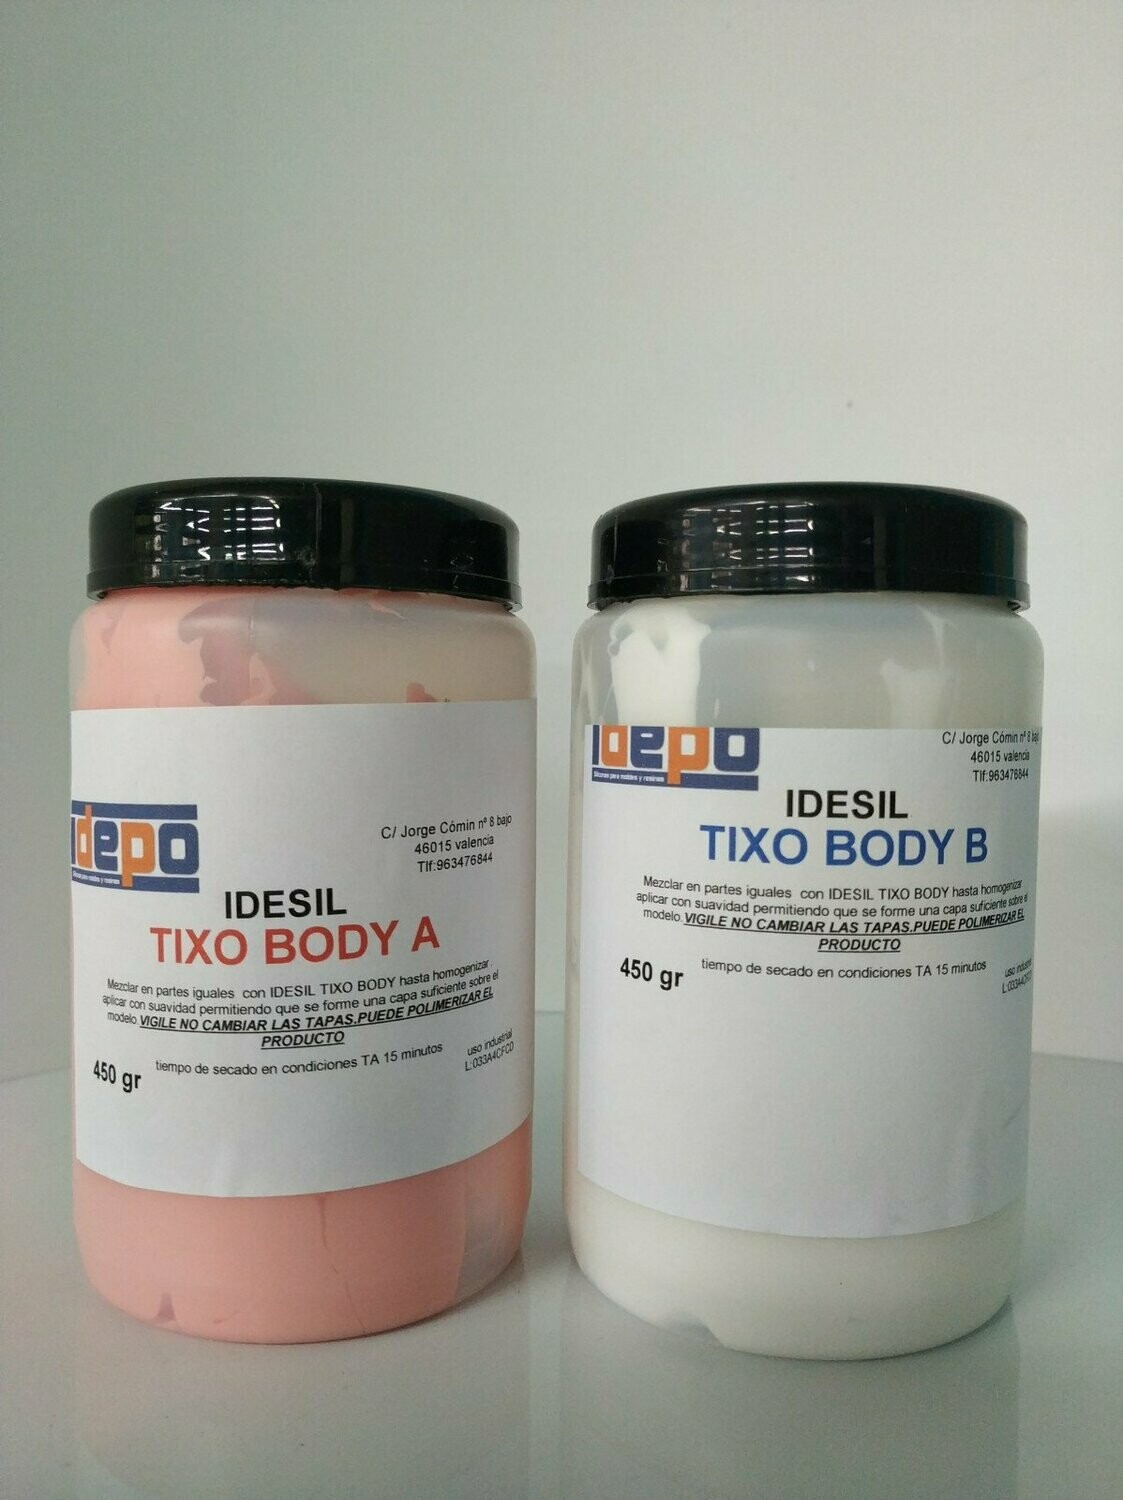 IDESIL TIXO BODY 900 GRS silicona para copia de partes del cuerpo